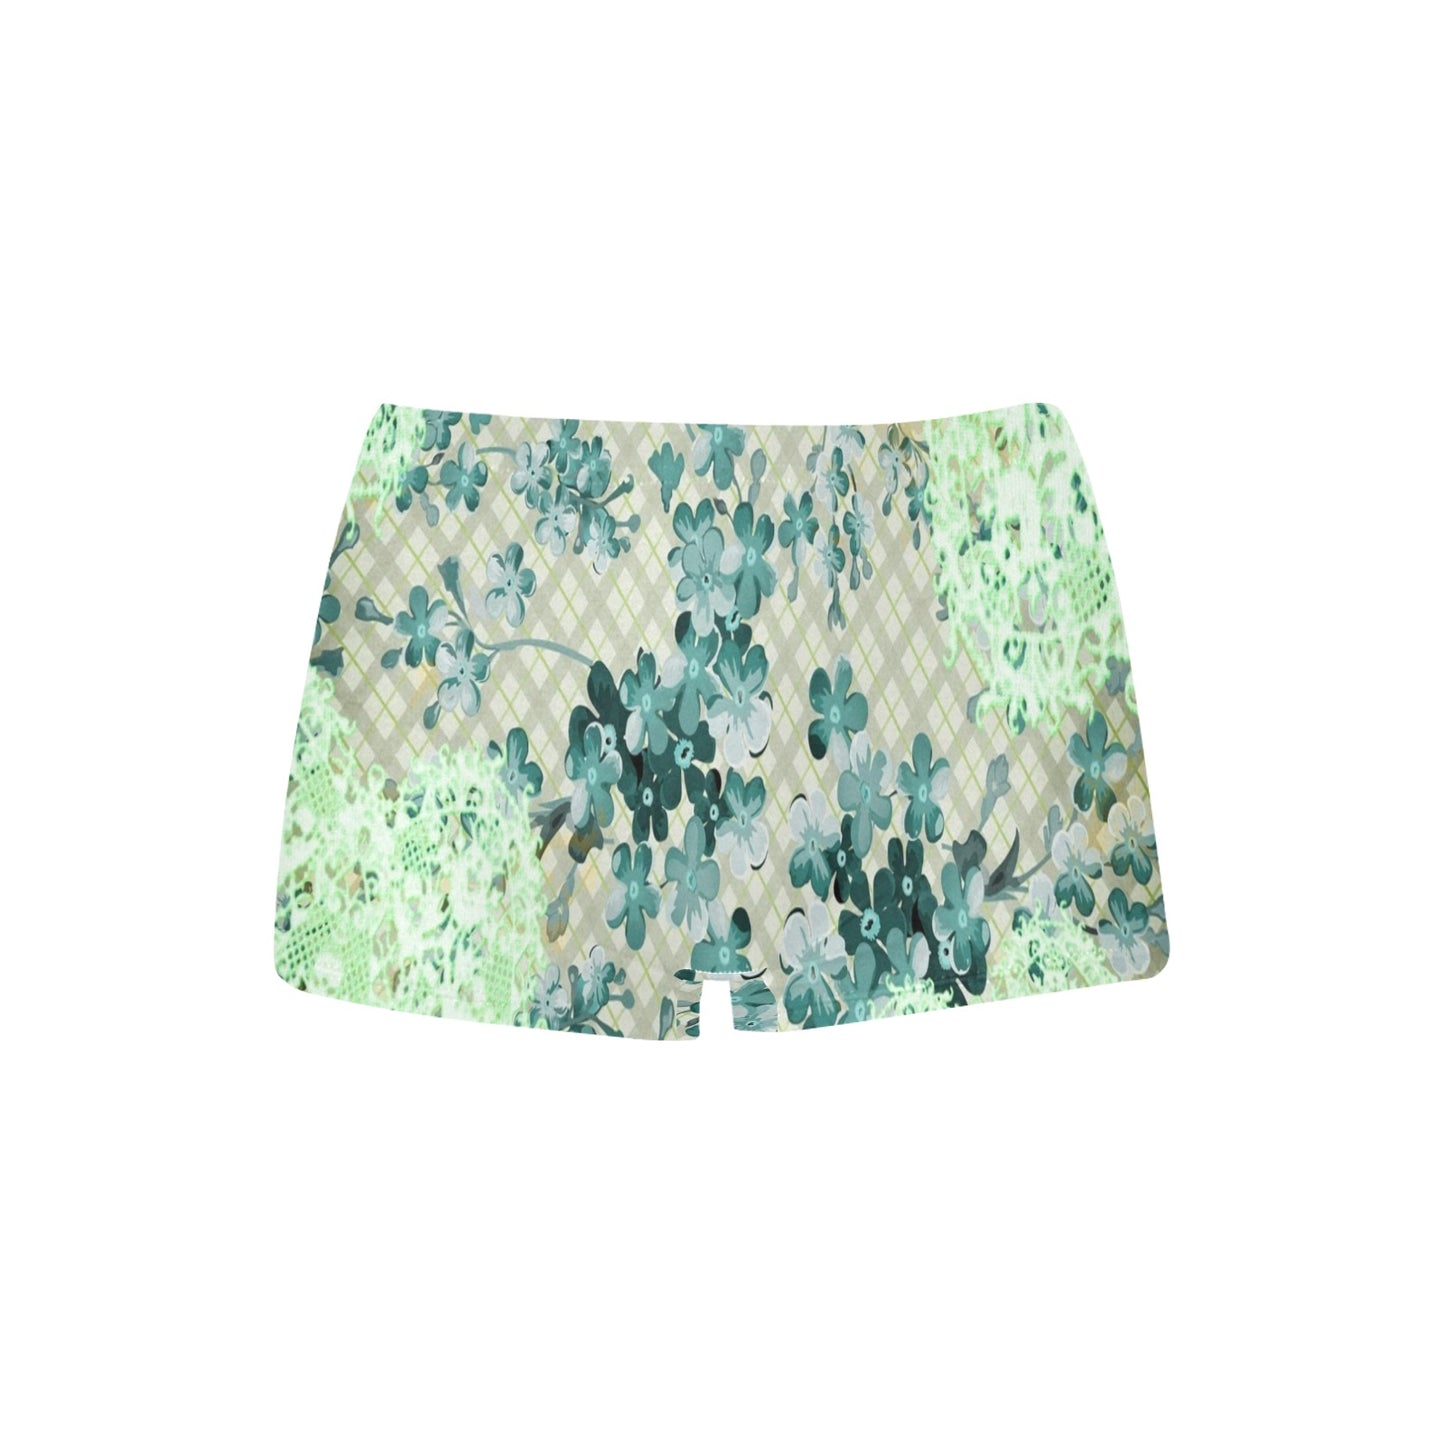 Printed Lace Boyshorts, daisy dukes, pum pum shorts, shortie shorts, design 53